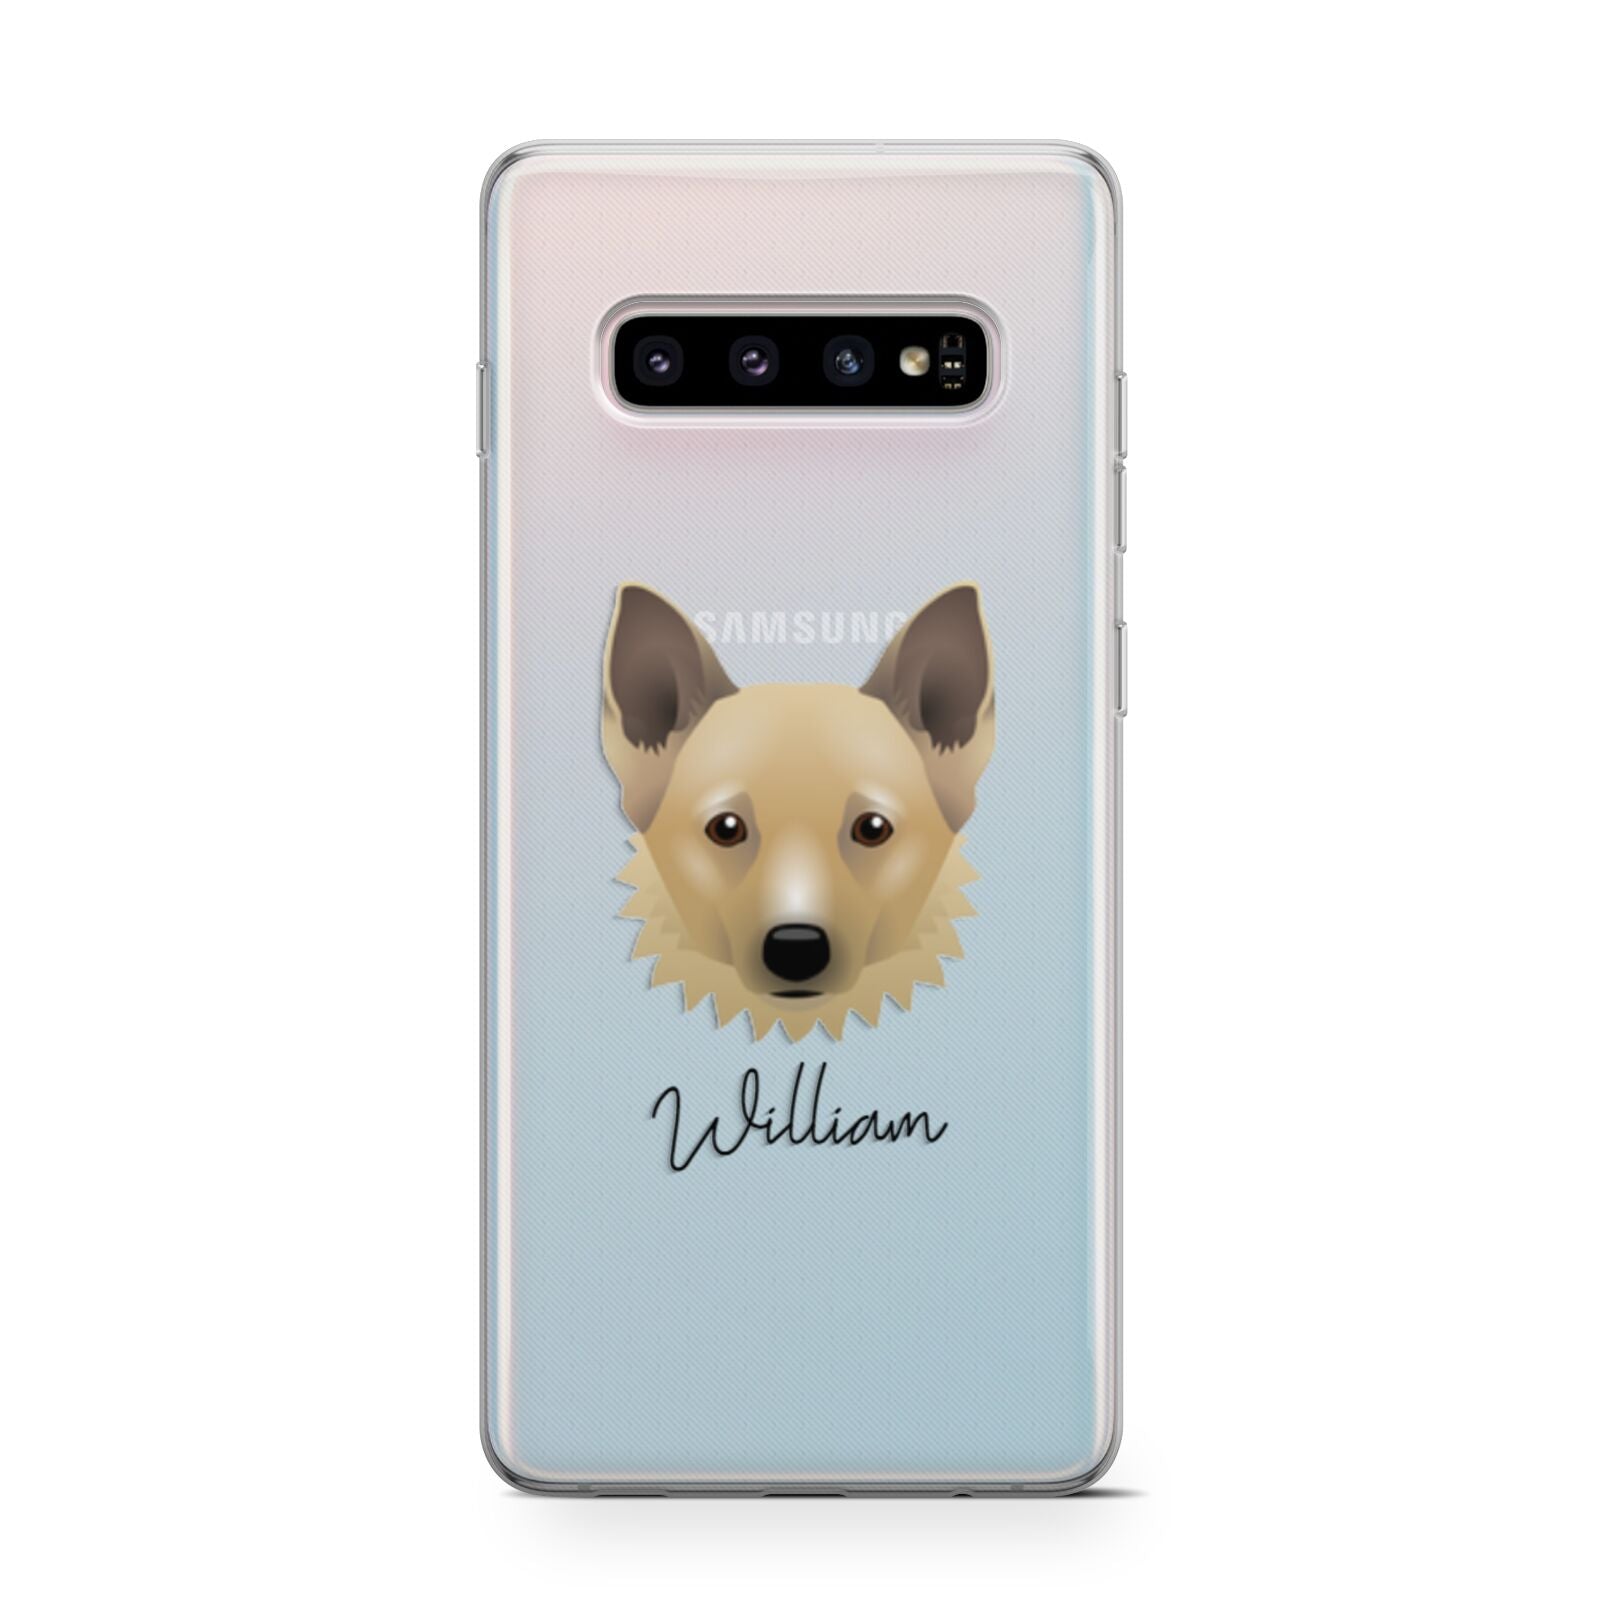 Canadian Eskimo Dog Personalised Samsung Galaxy S10 Case